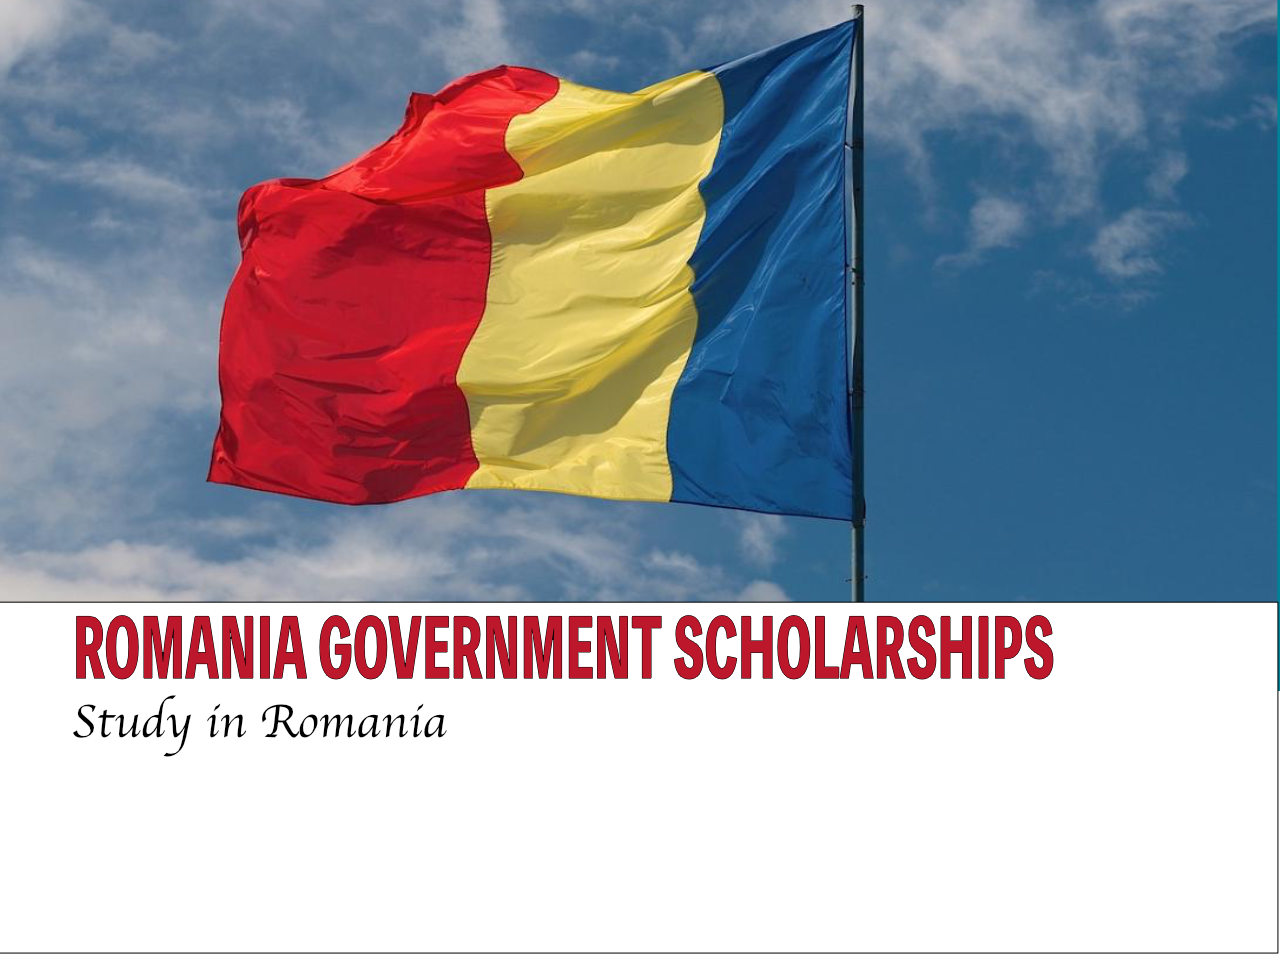 Romania government scholarship